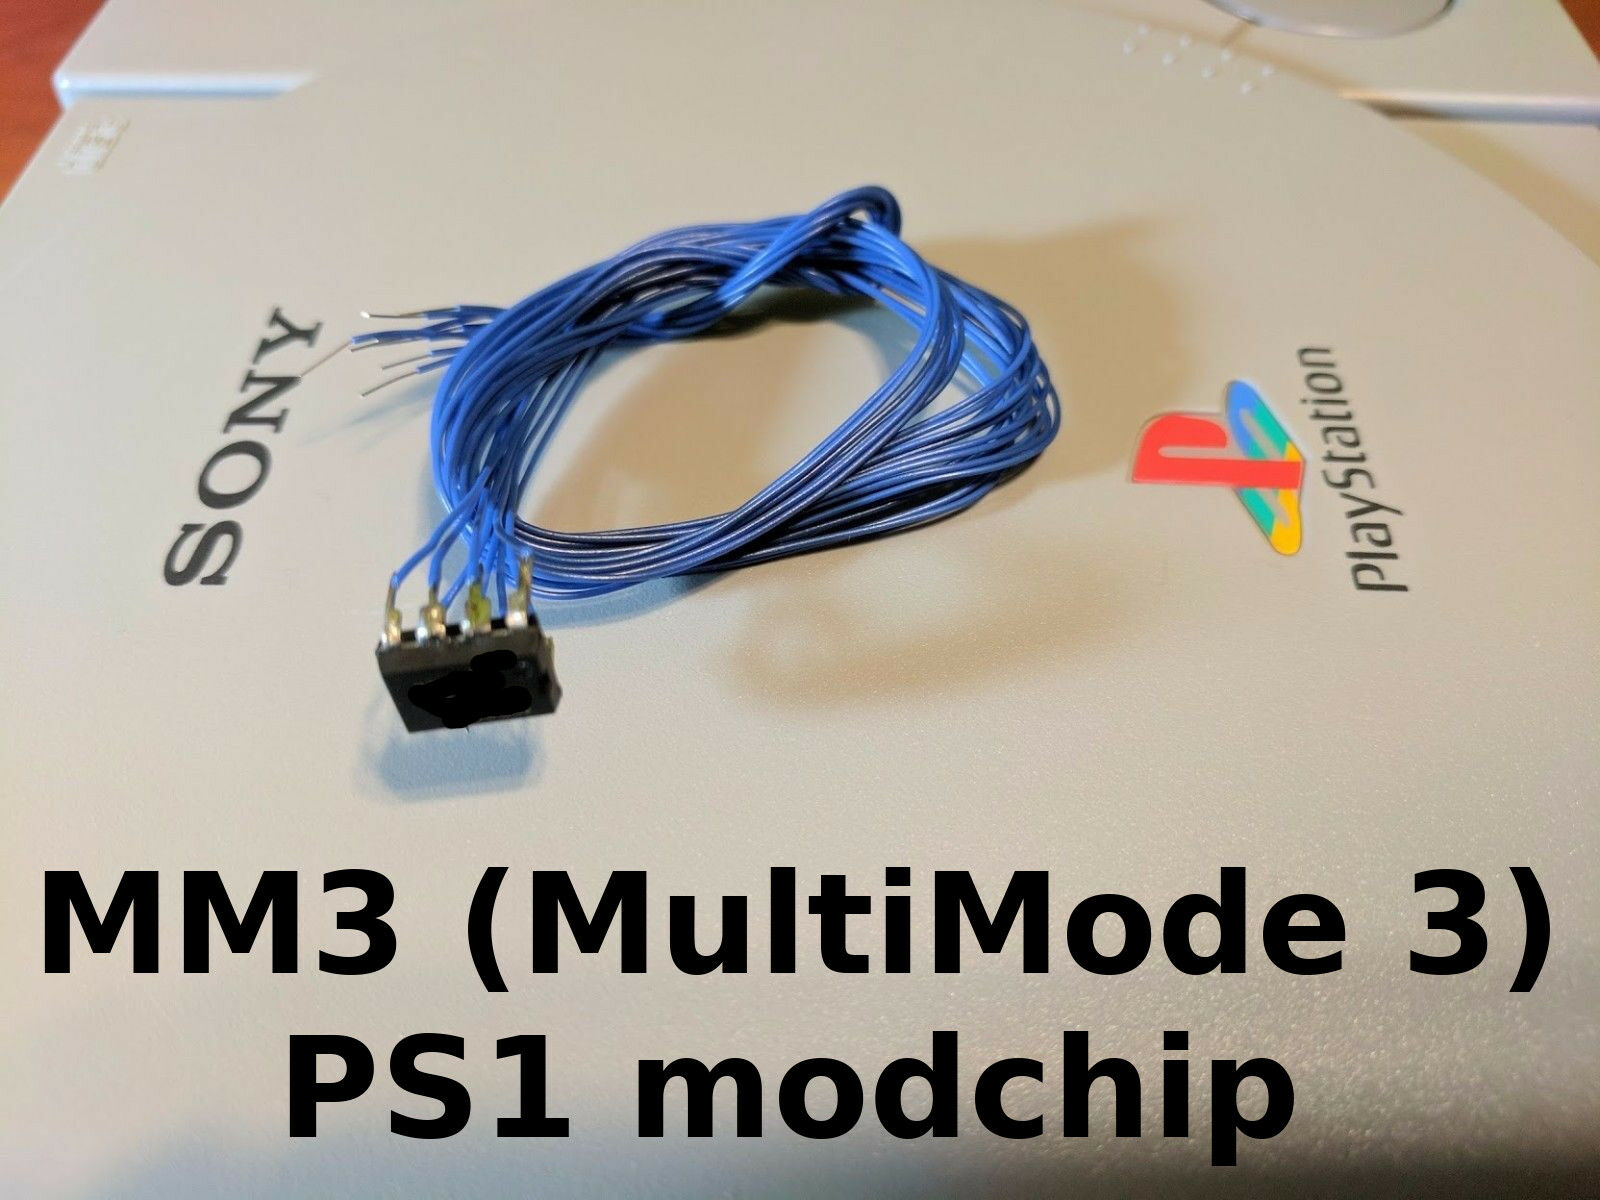 Multimode 3 (MM3) modchip - PlayStation 1 - Store - William Quade